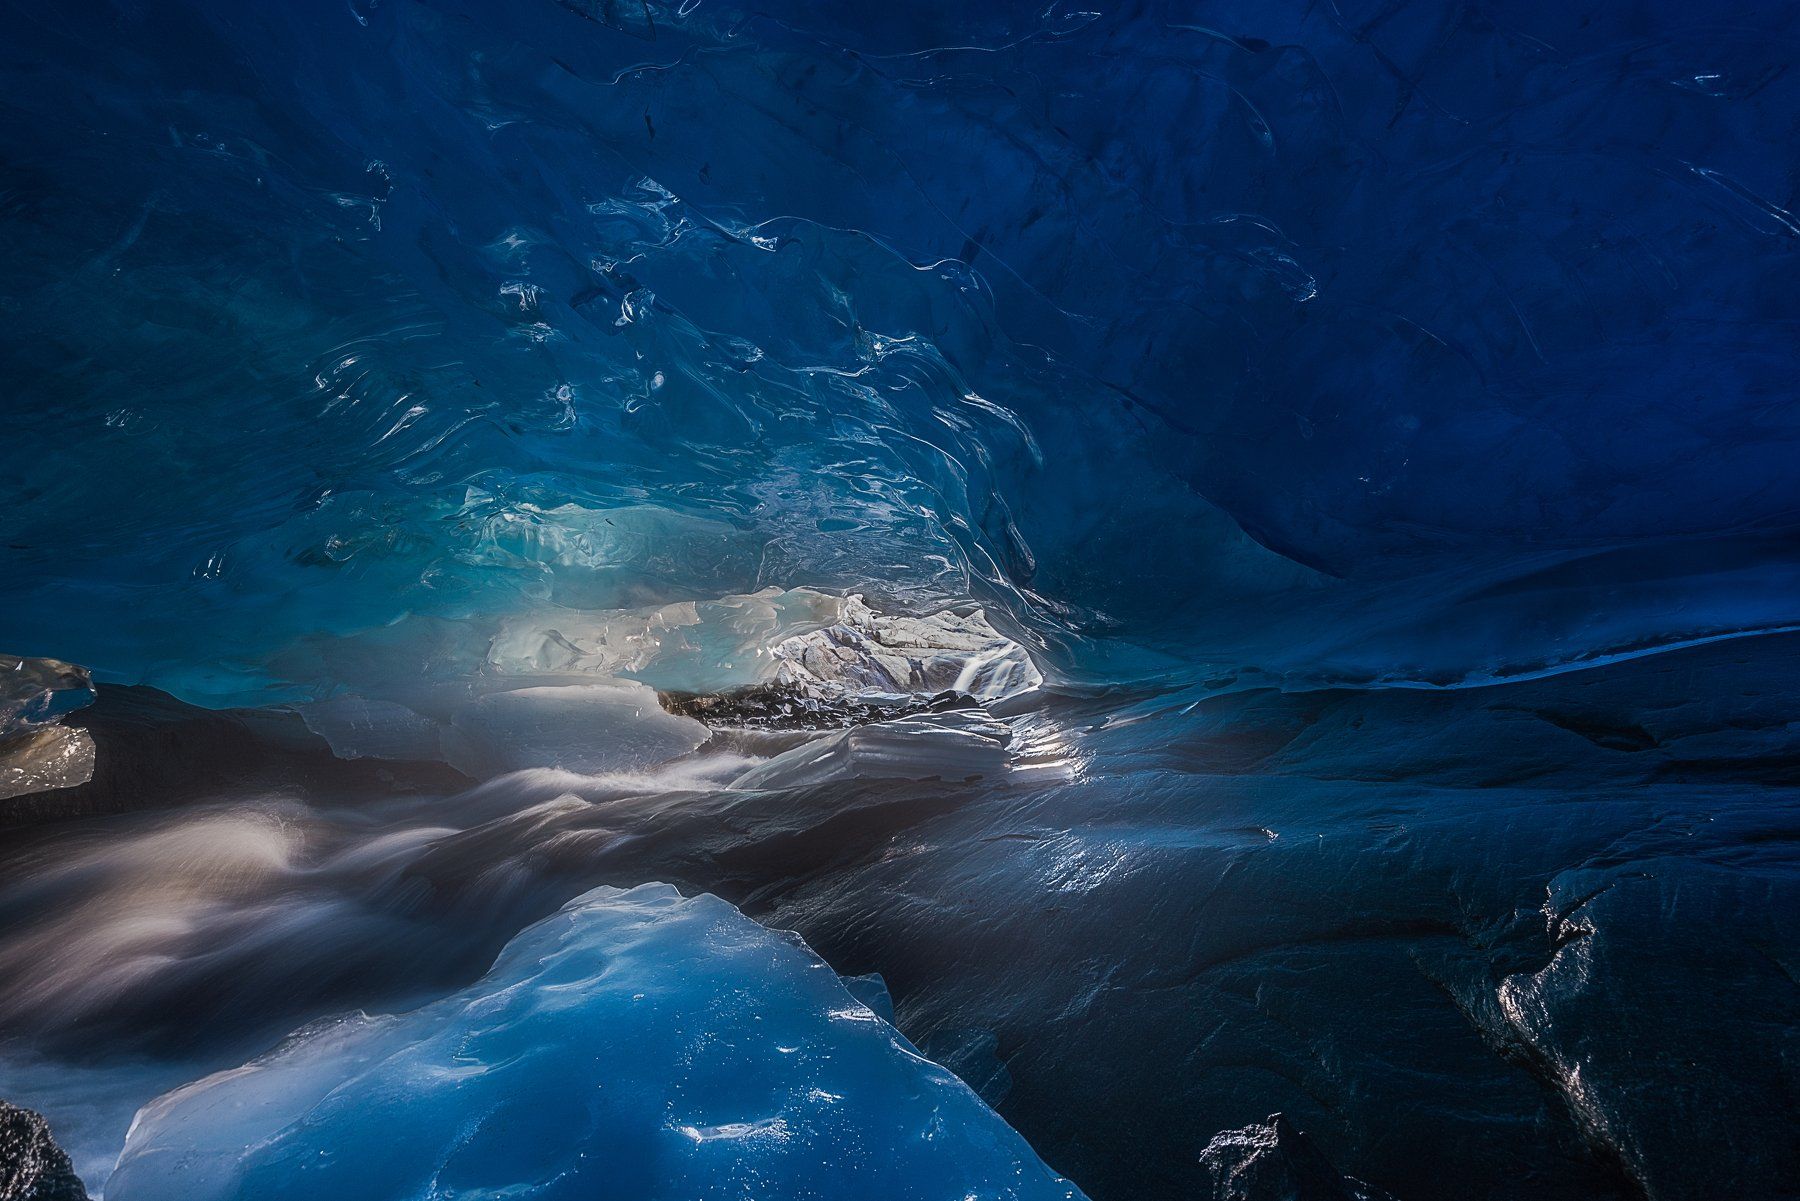 aletch glacier,switzerland,zeiss milvus 15mm,ice cave,mountain fototravel,felix Ostapenko photography,long exposure, Felix Ostapenko